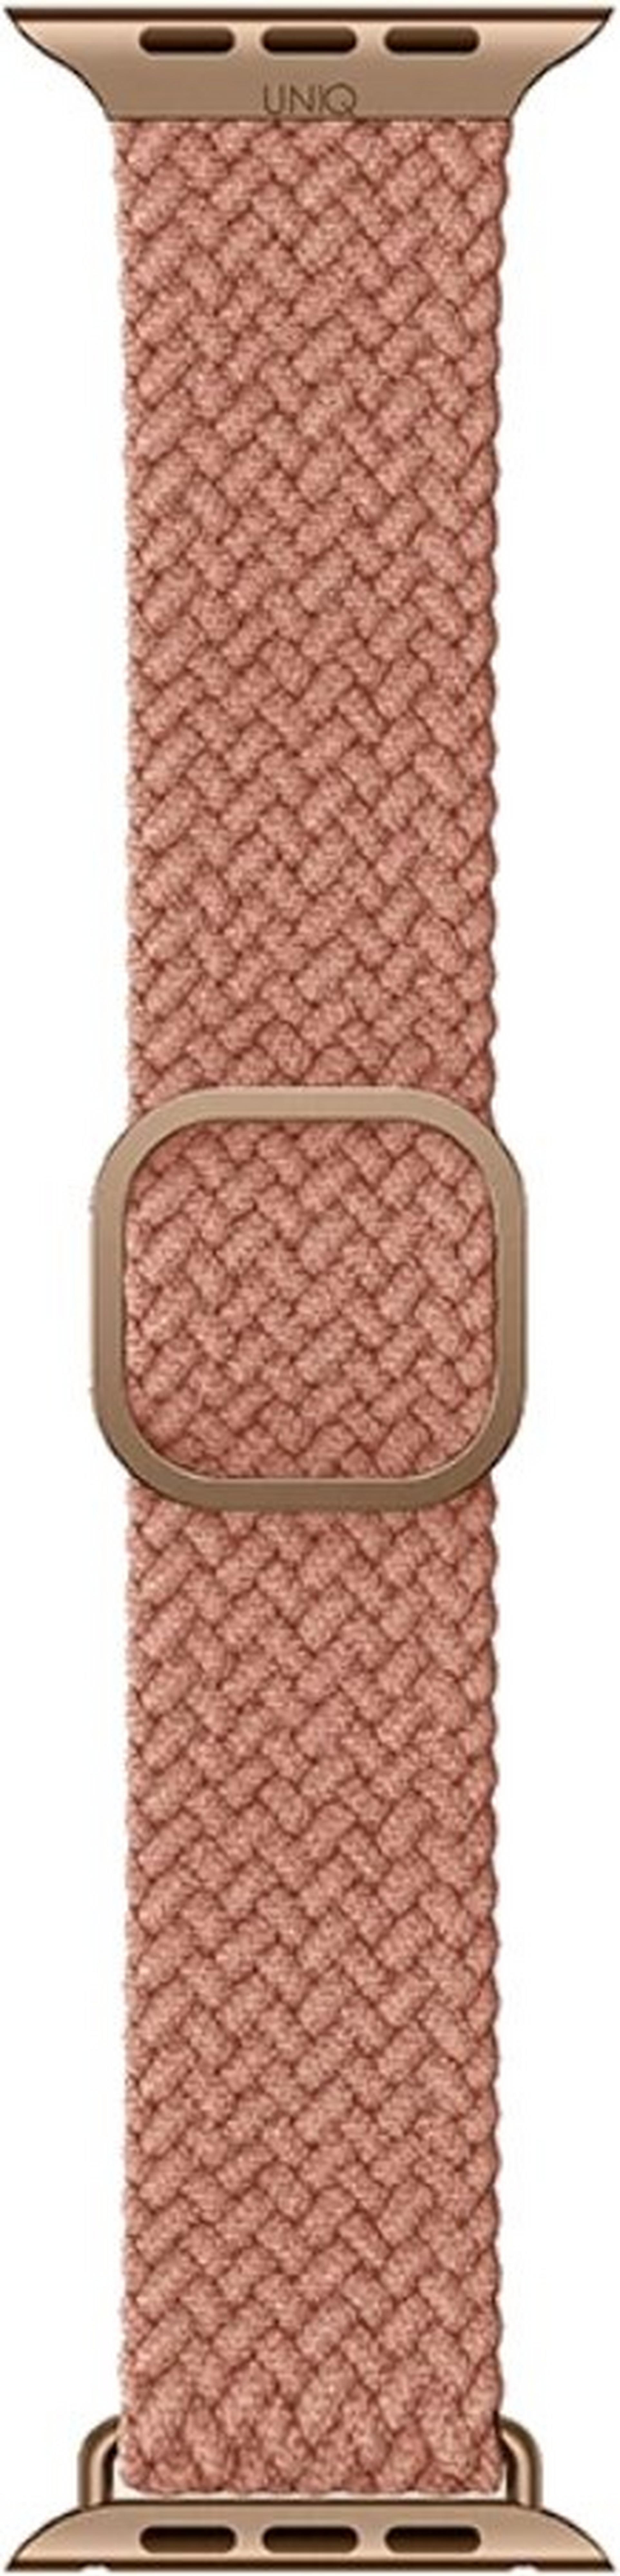 Uniq Aspen Apple Watch Strap 40/38mm - Pink